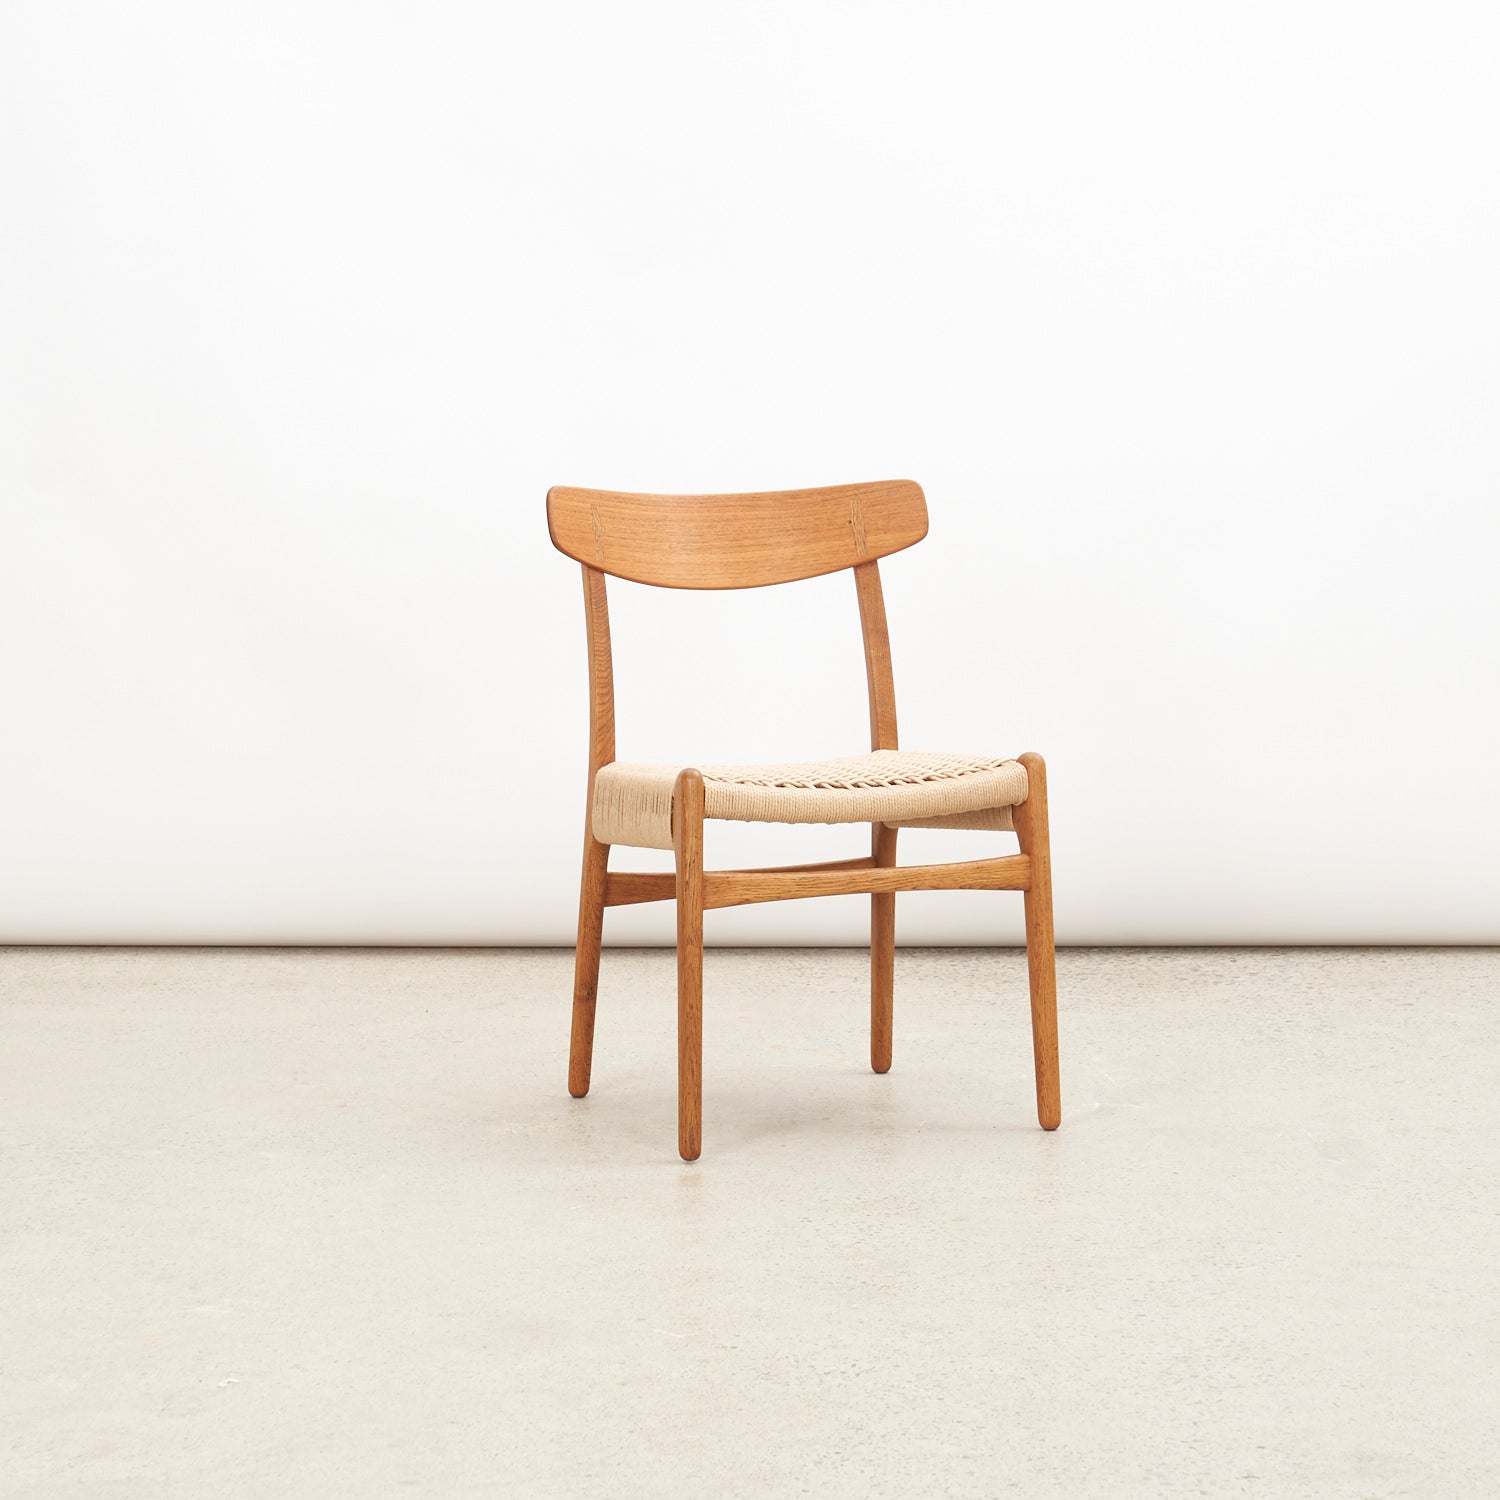 Set of 4 Oak 'CH23' Dining Chairs by Hans Wegner for Carl Hansen & Søn, Denmark Vintage Furniture Danish Design Scandinavian Modern Mid-century Modern Danish C